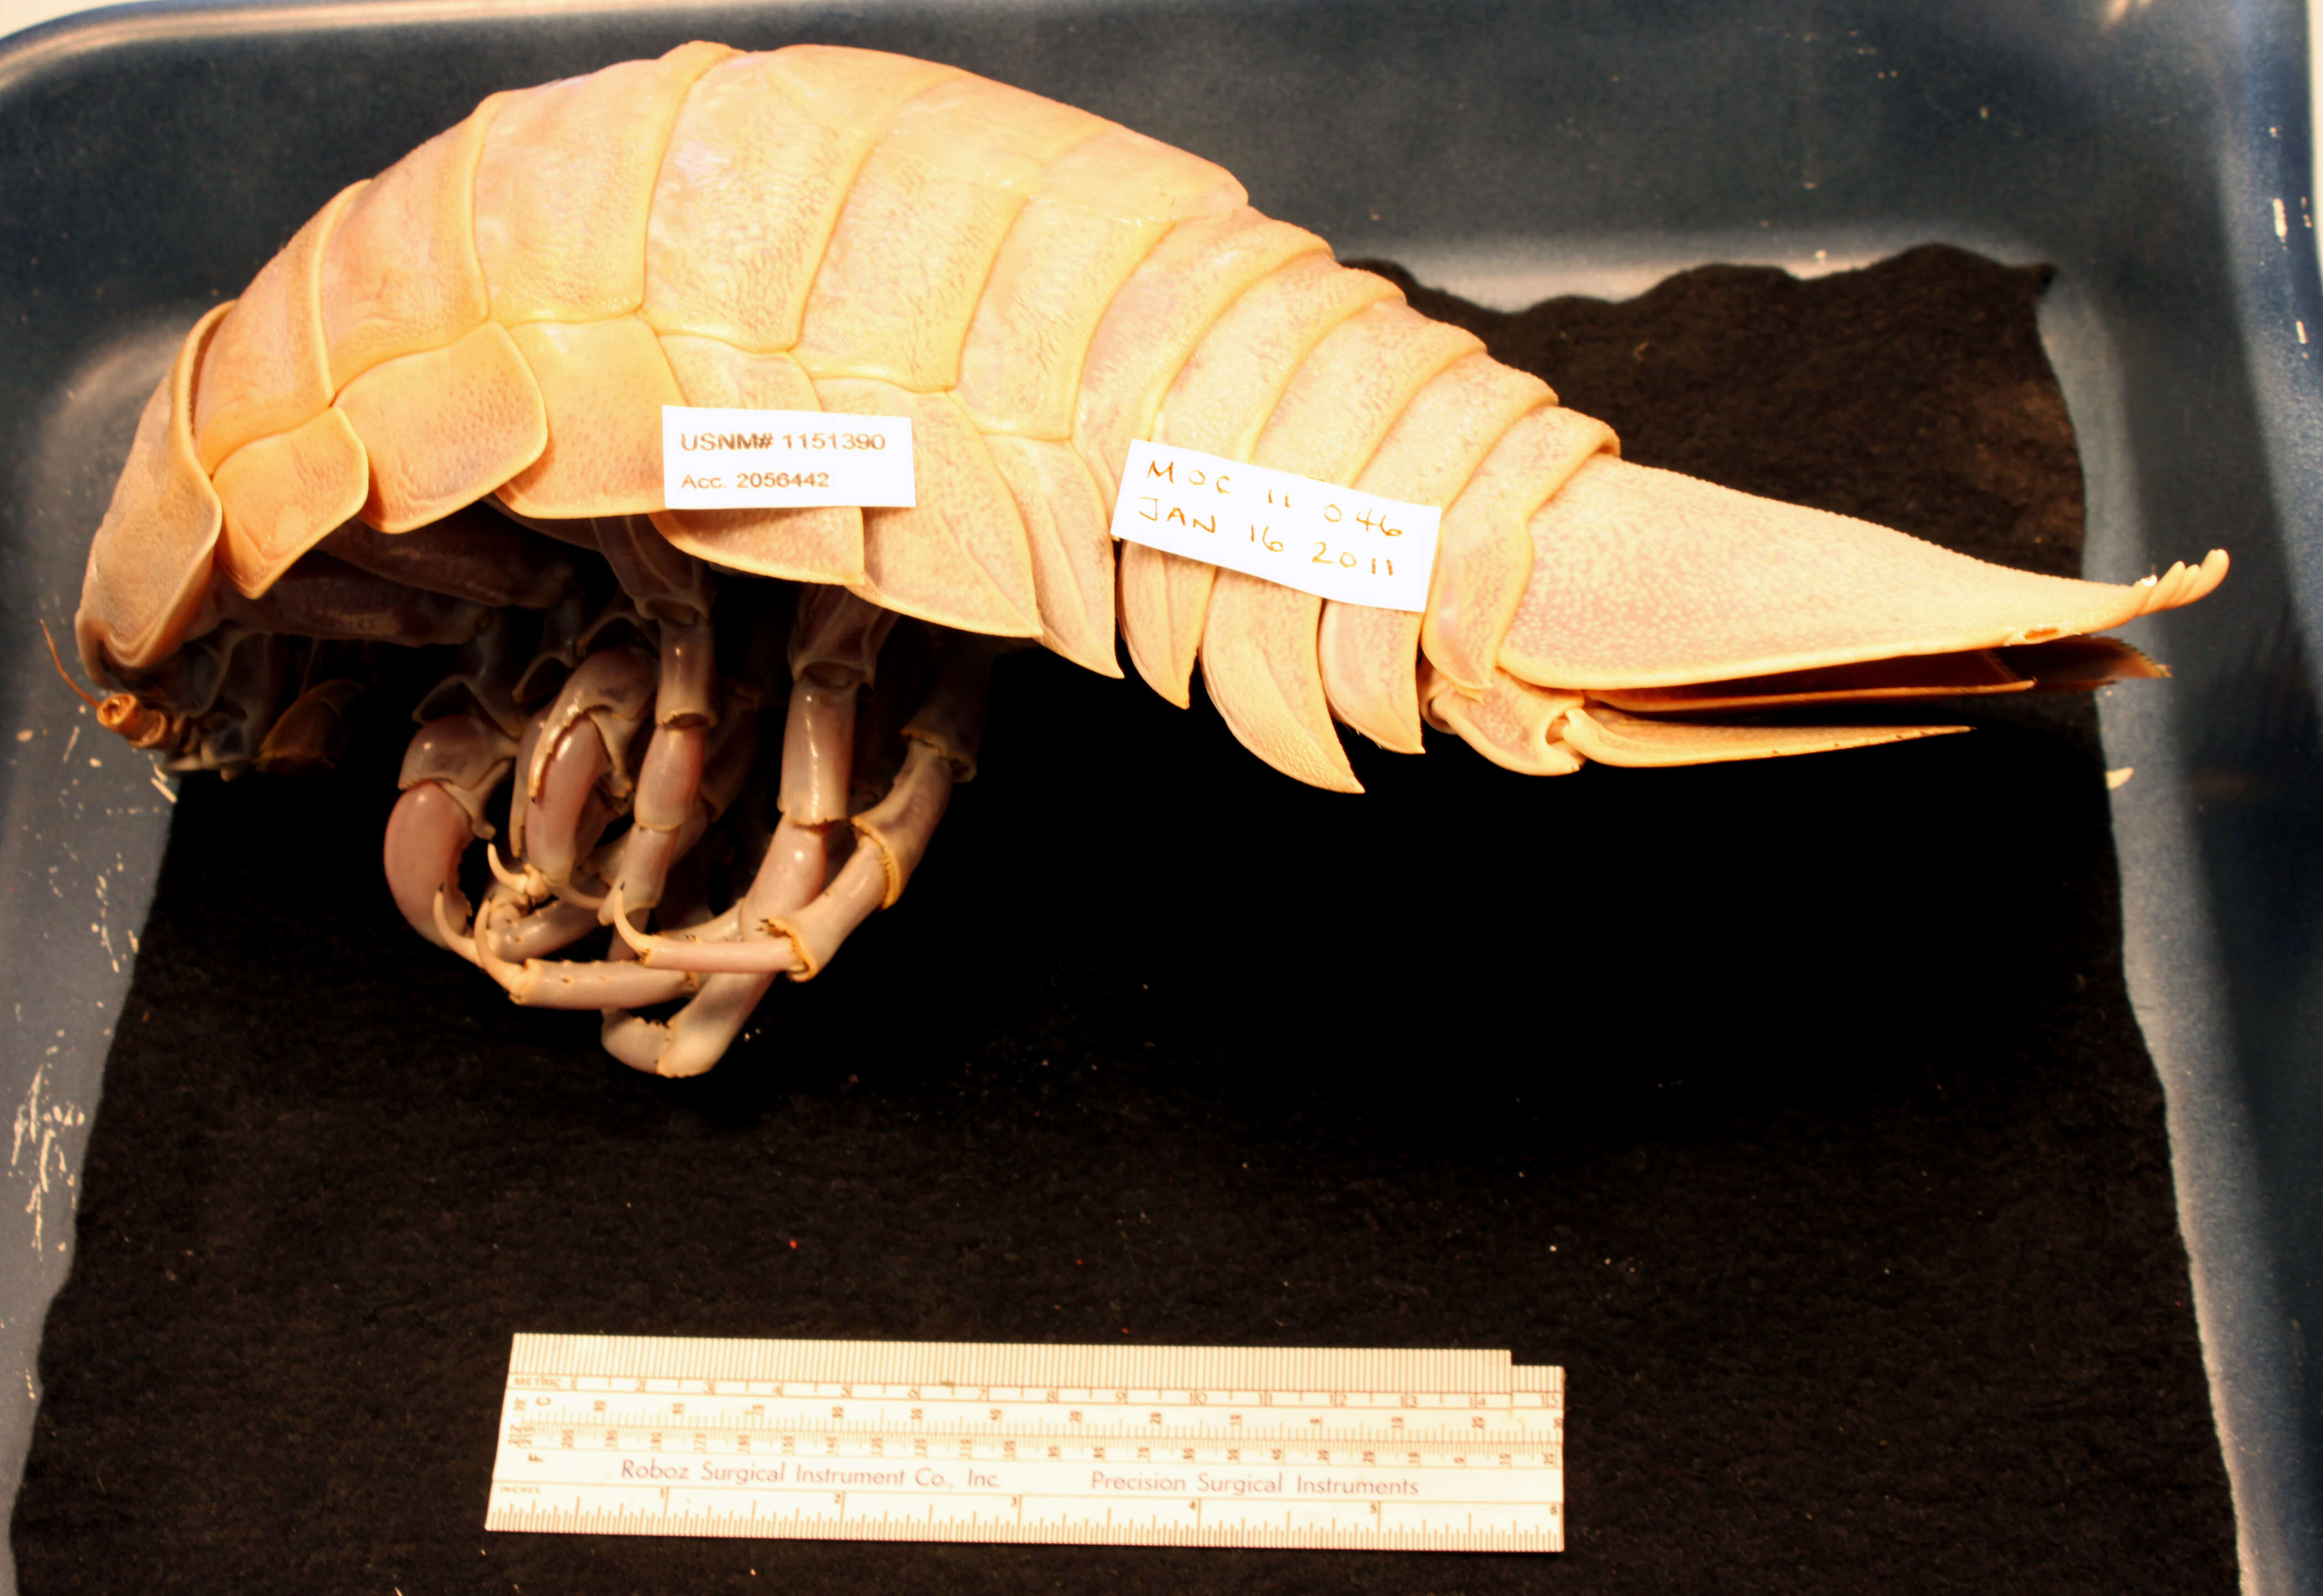 Image of Giant Isopods